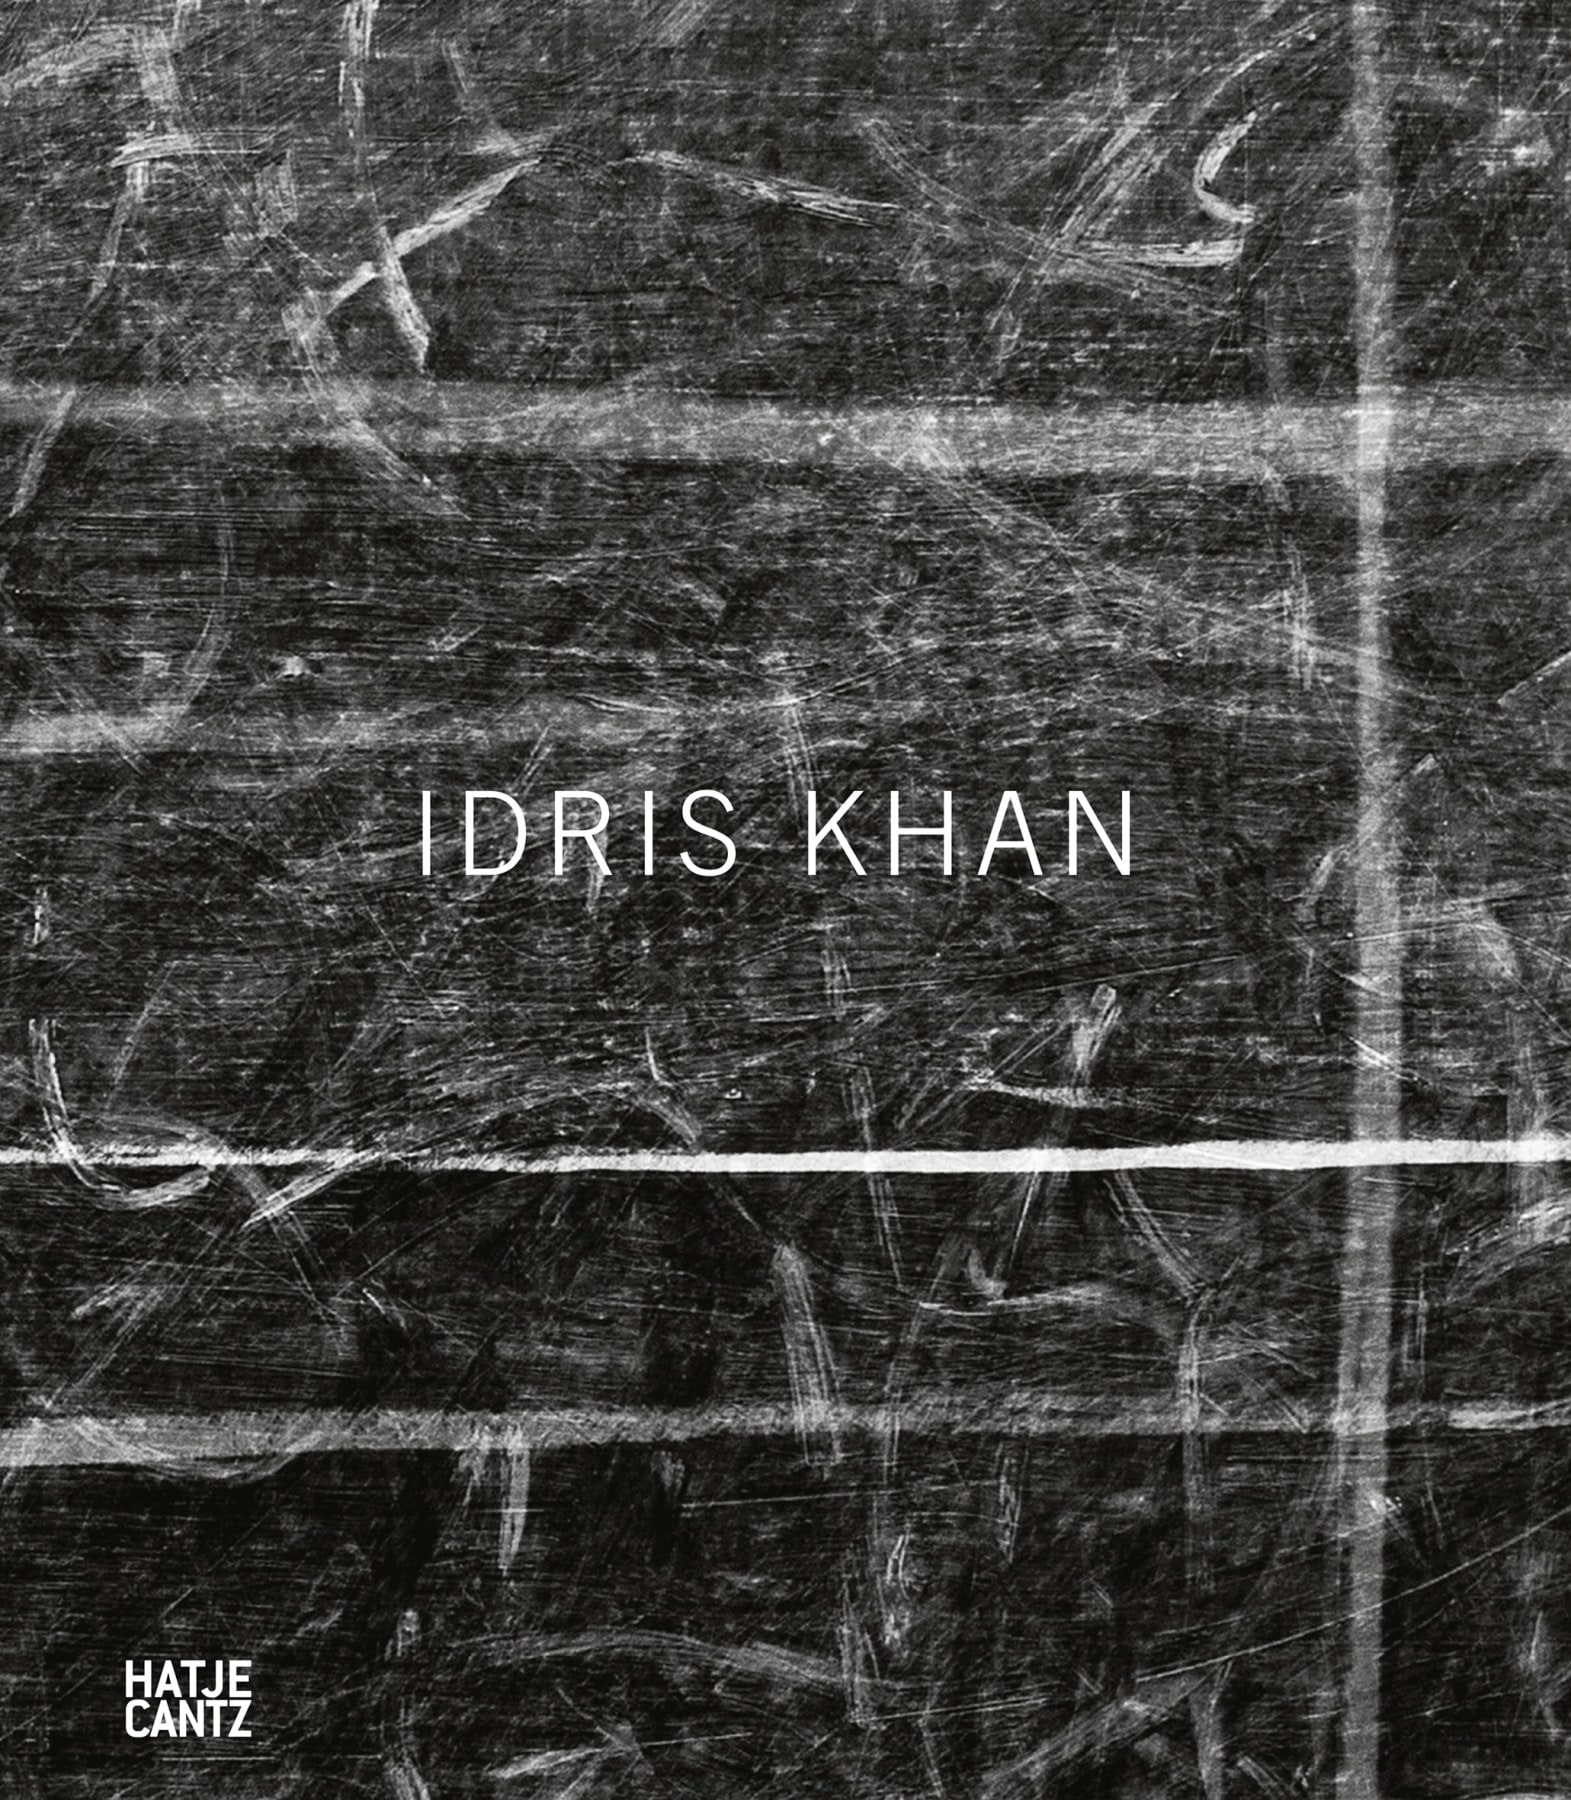 Idris Khan: The World Within